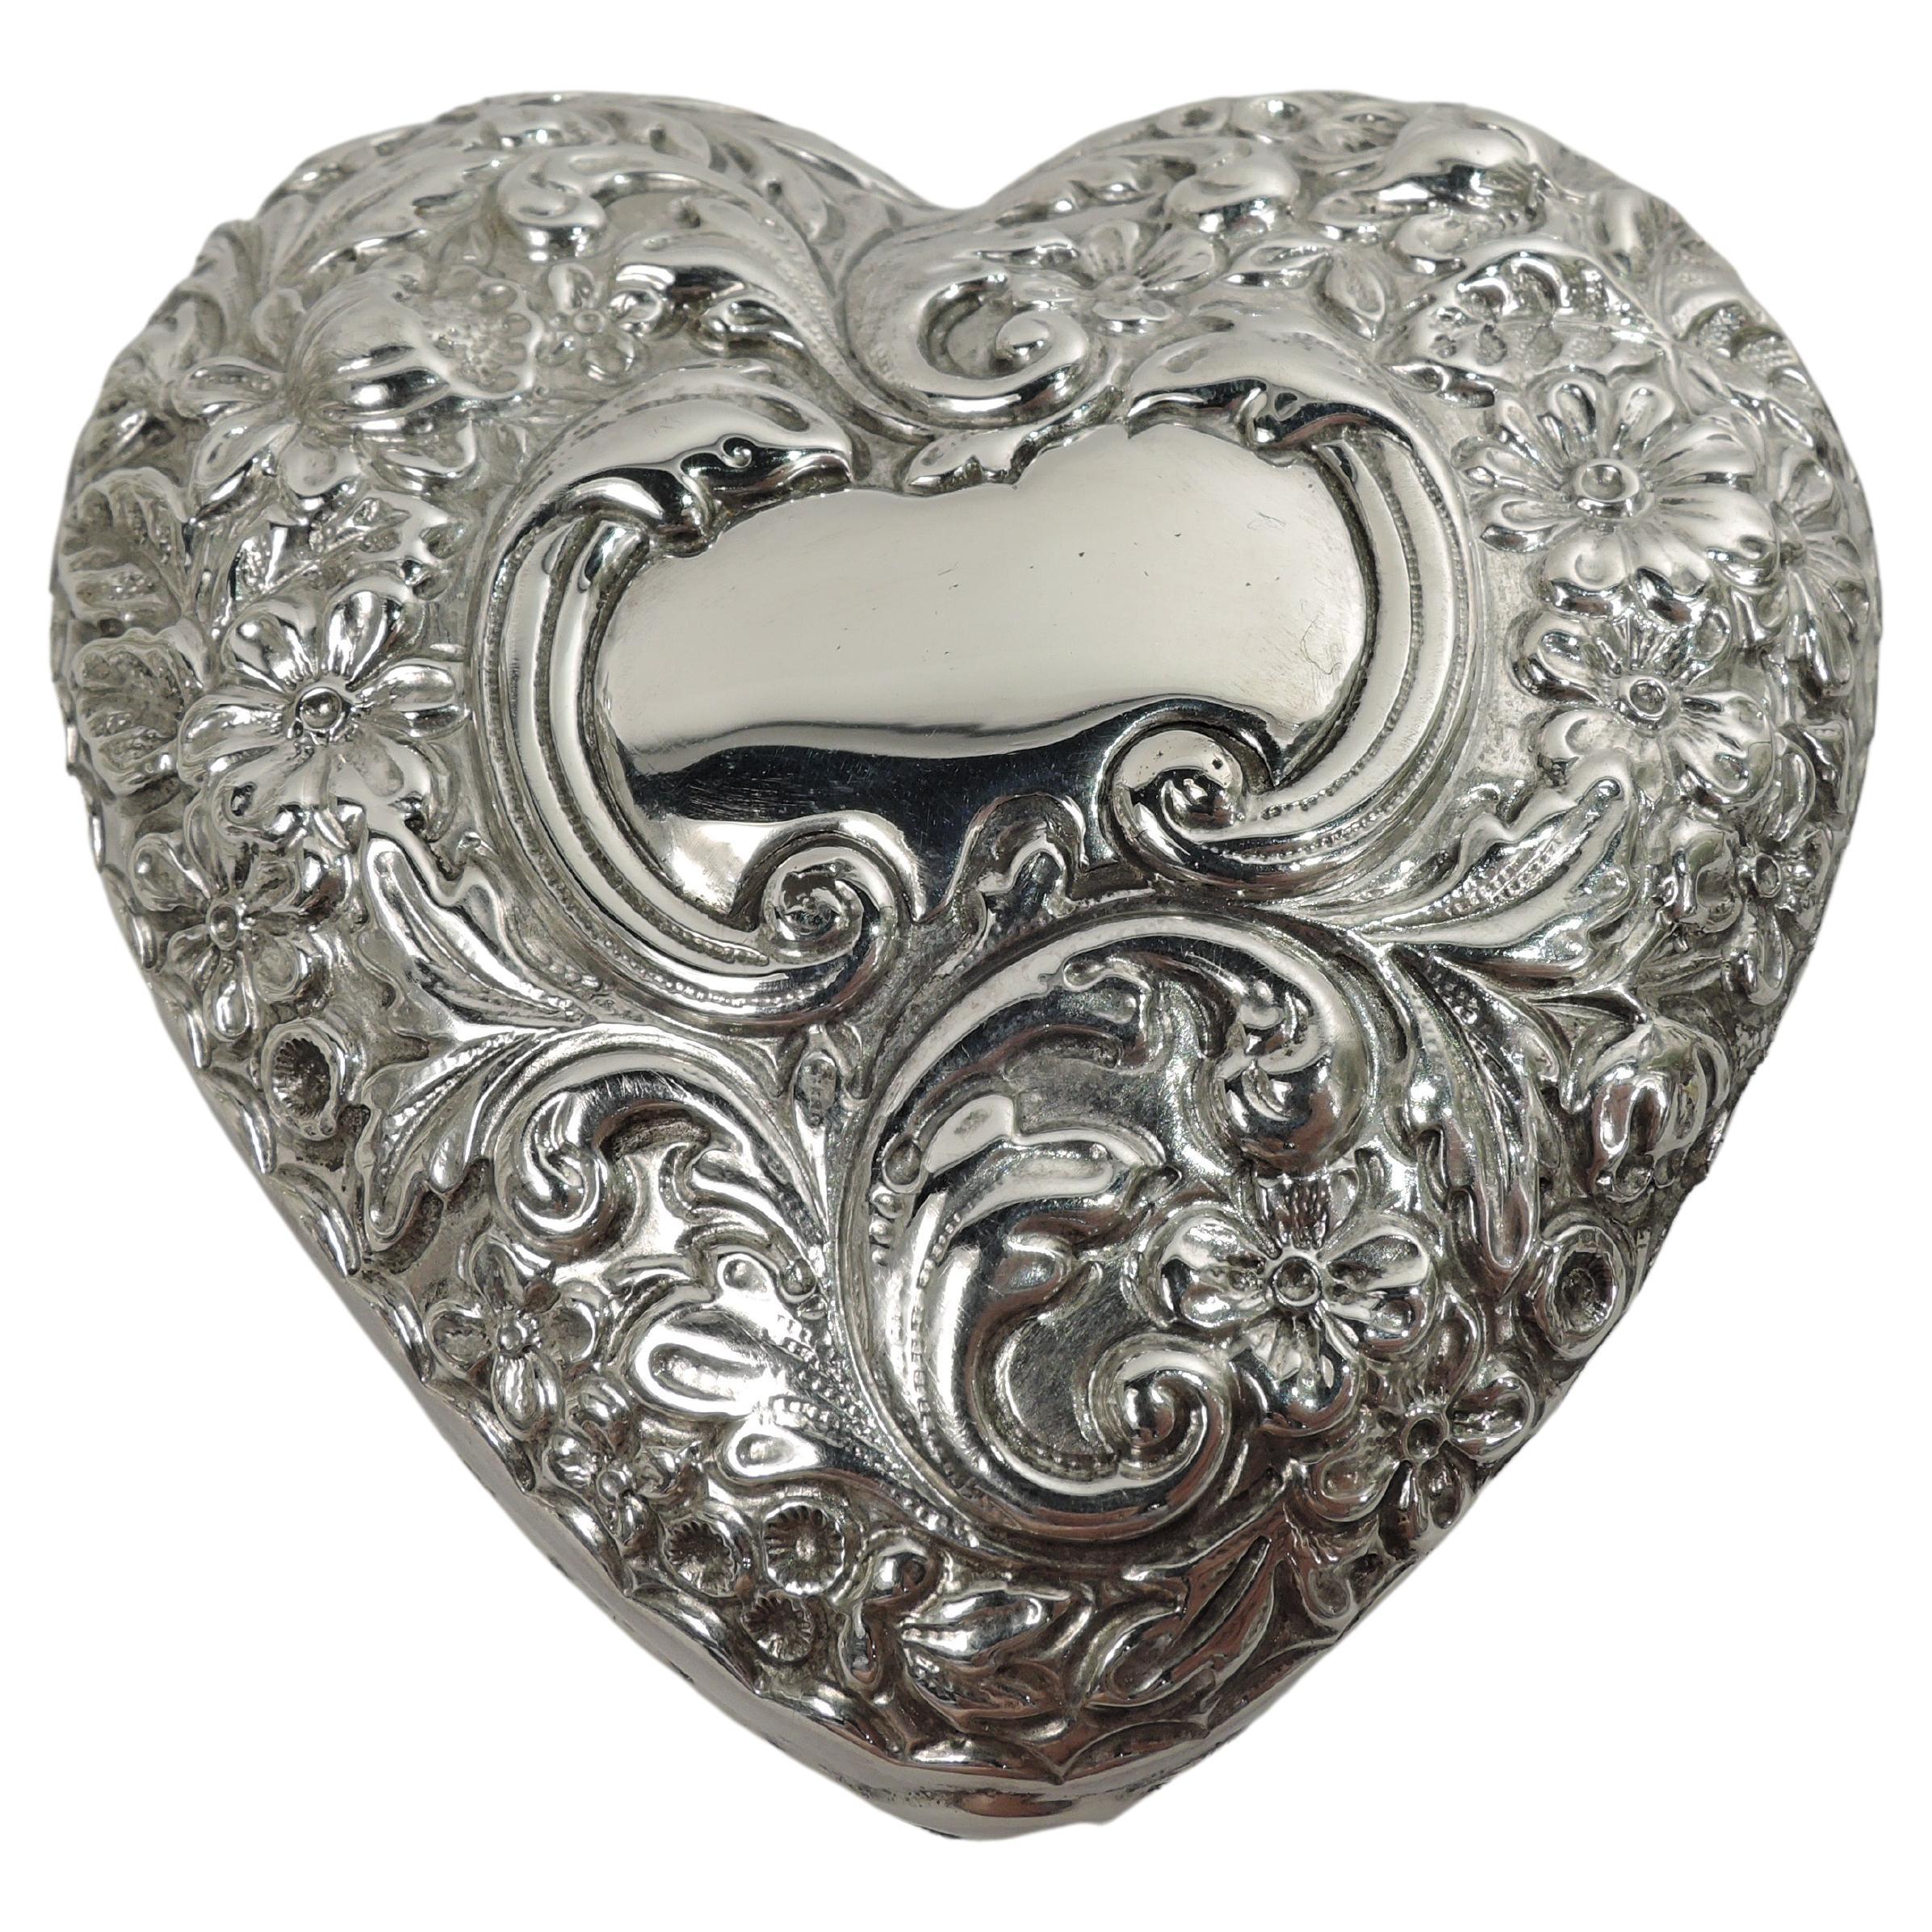 Antique Gorham Lushly Romantic Victorian Heart-Shaped Jewelry Box